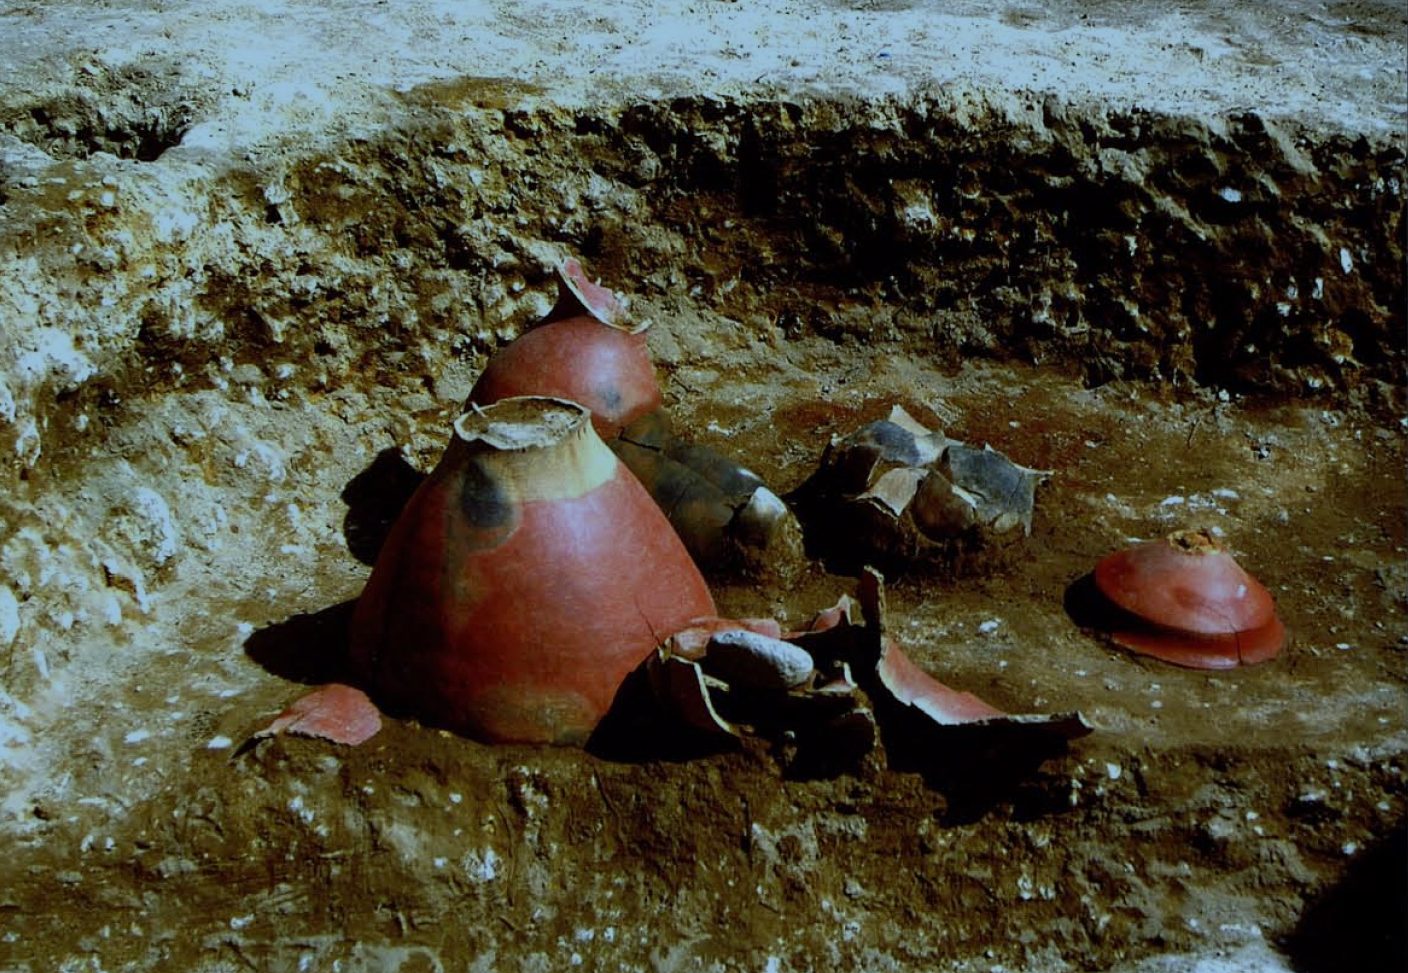 Ceramics from the Saku City site